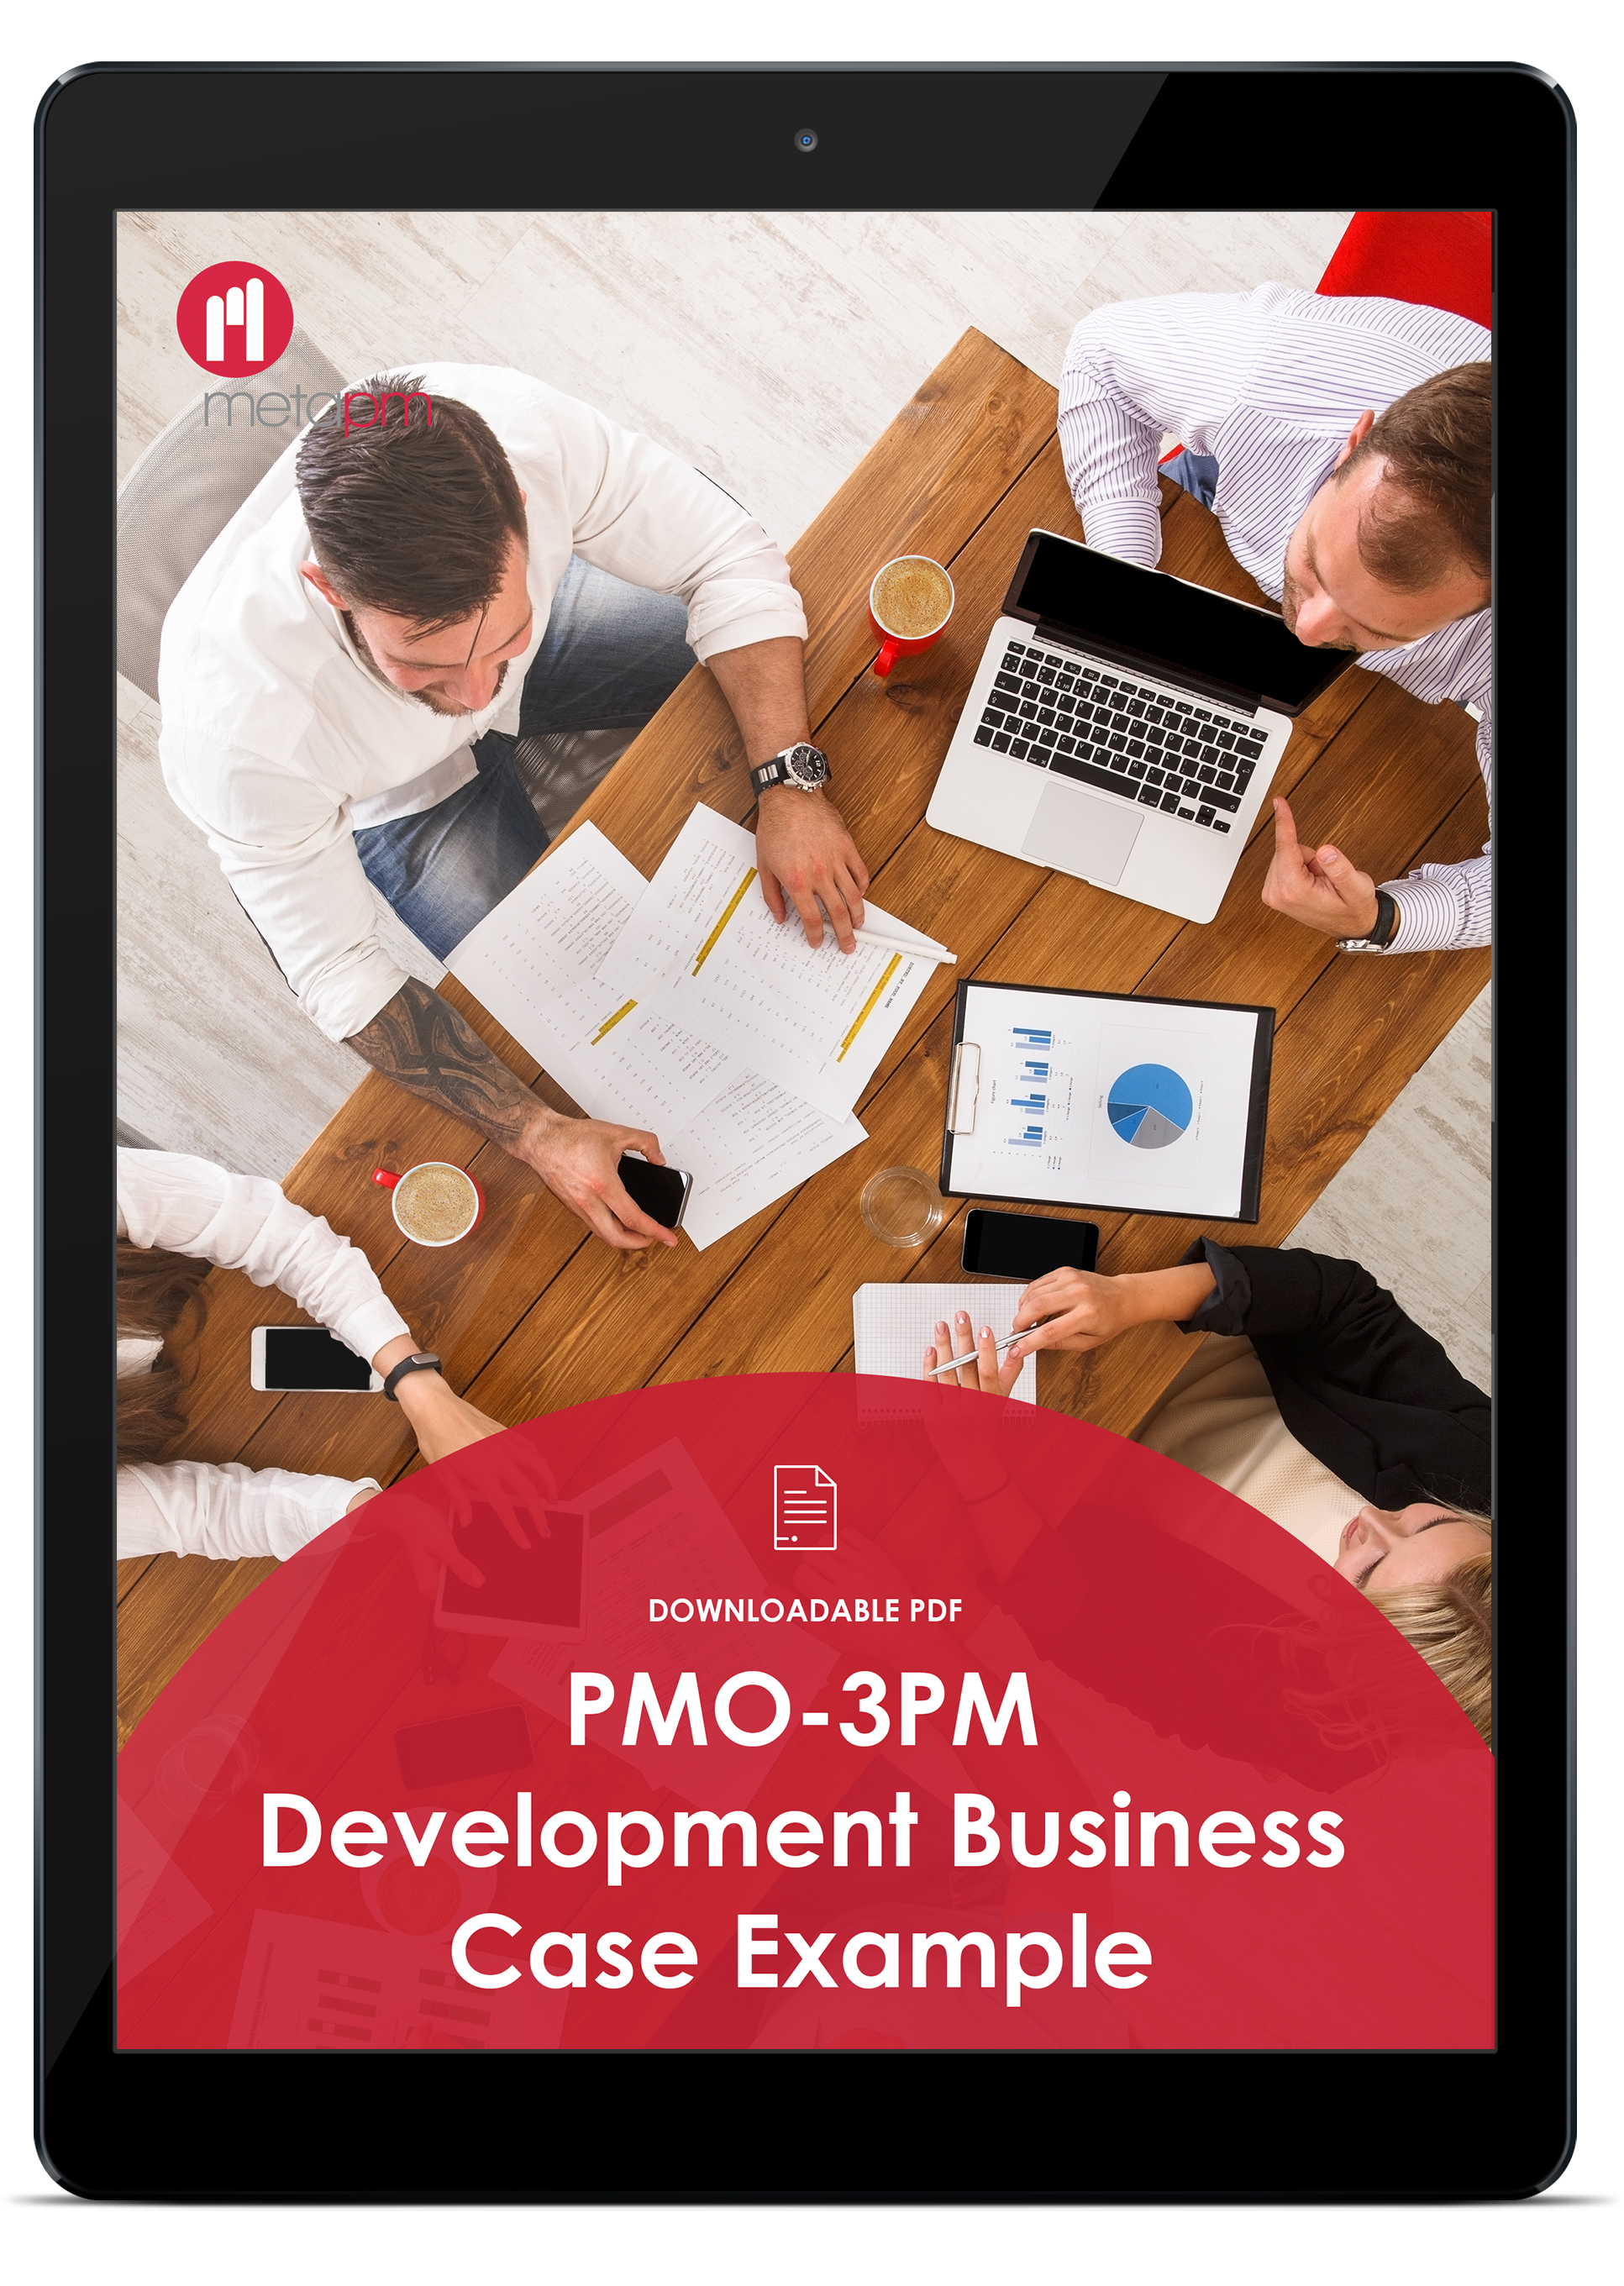 P3O-3PM Development Business Case 2